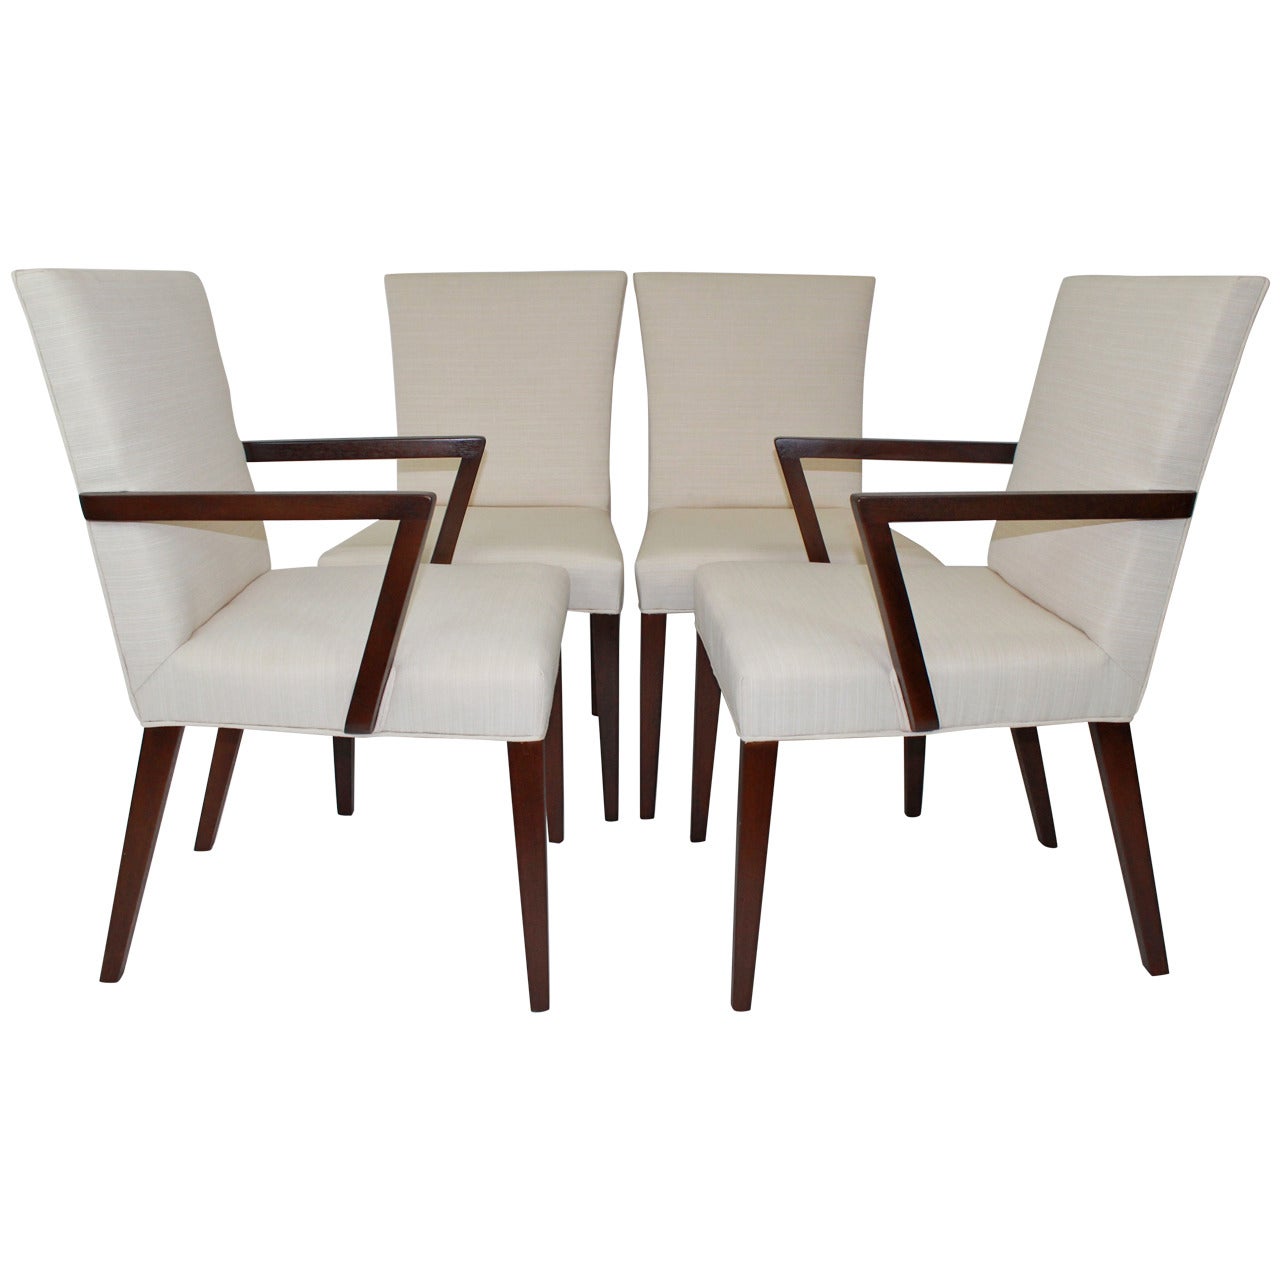 Set of Ten "Modern Originals" Dining Chairs by Widdicomb